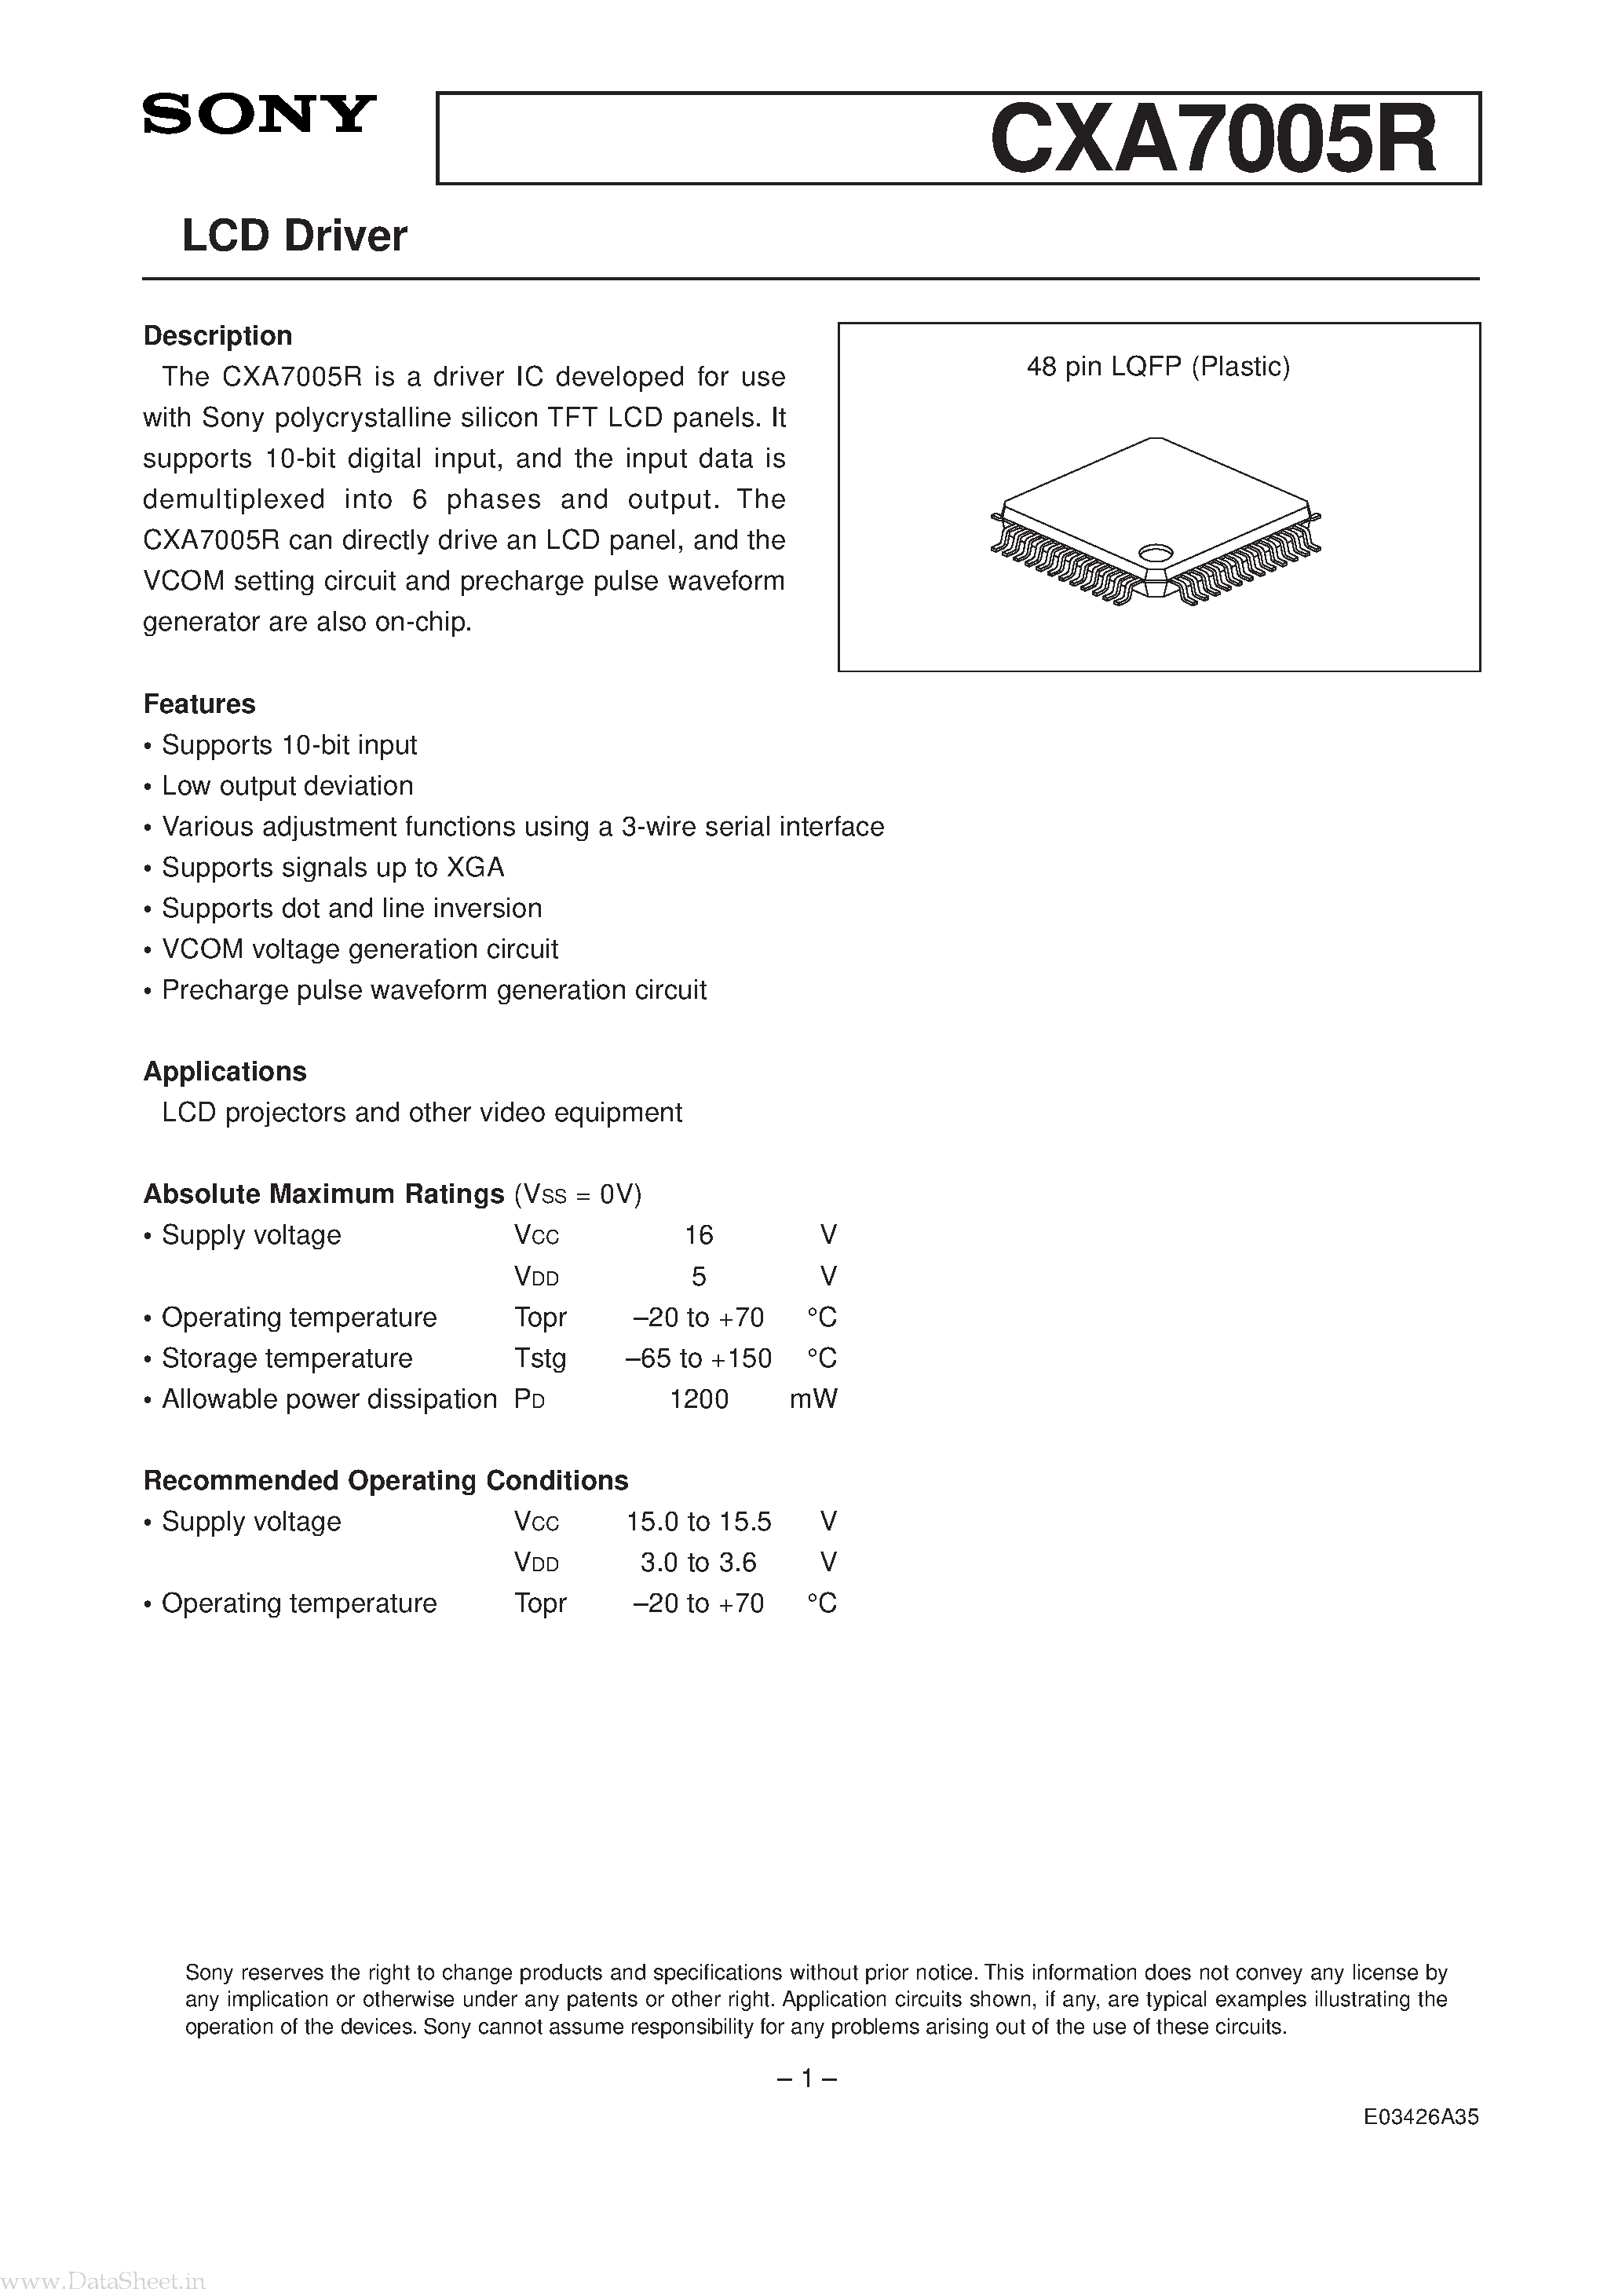 Datasheet CXA7005R - LCD Driver page 1